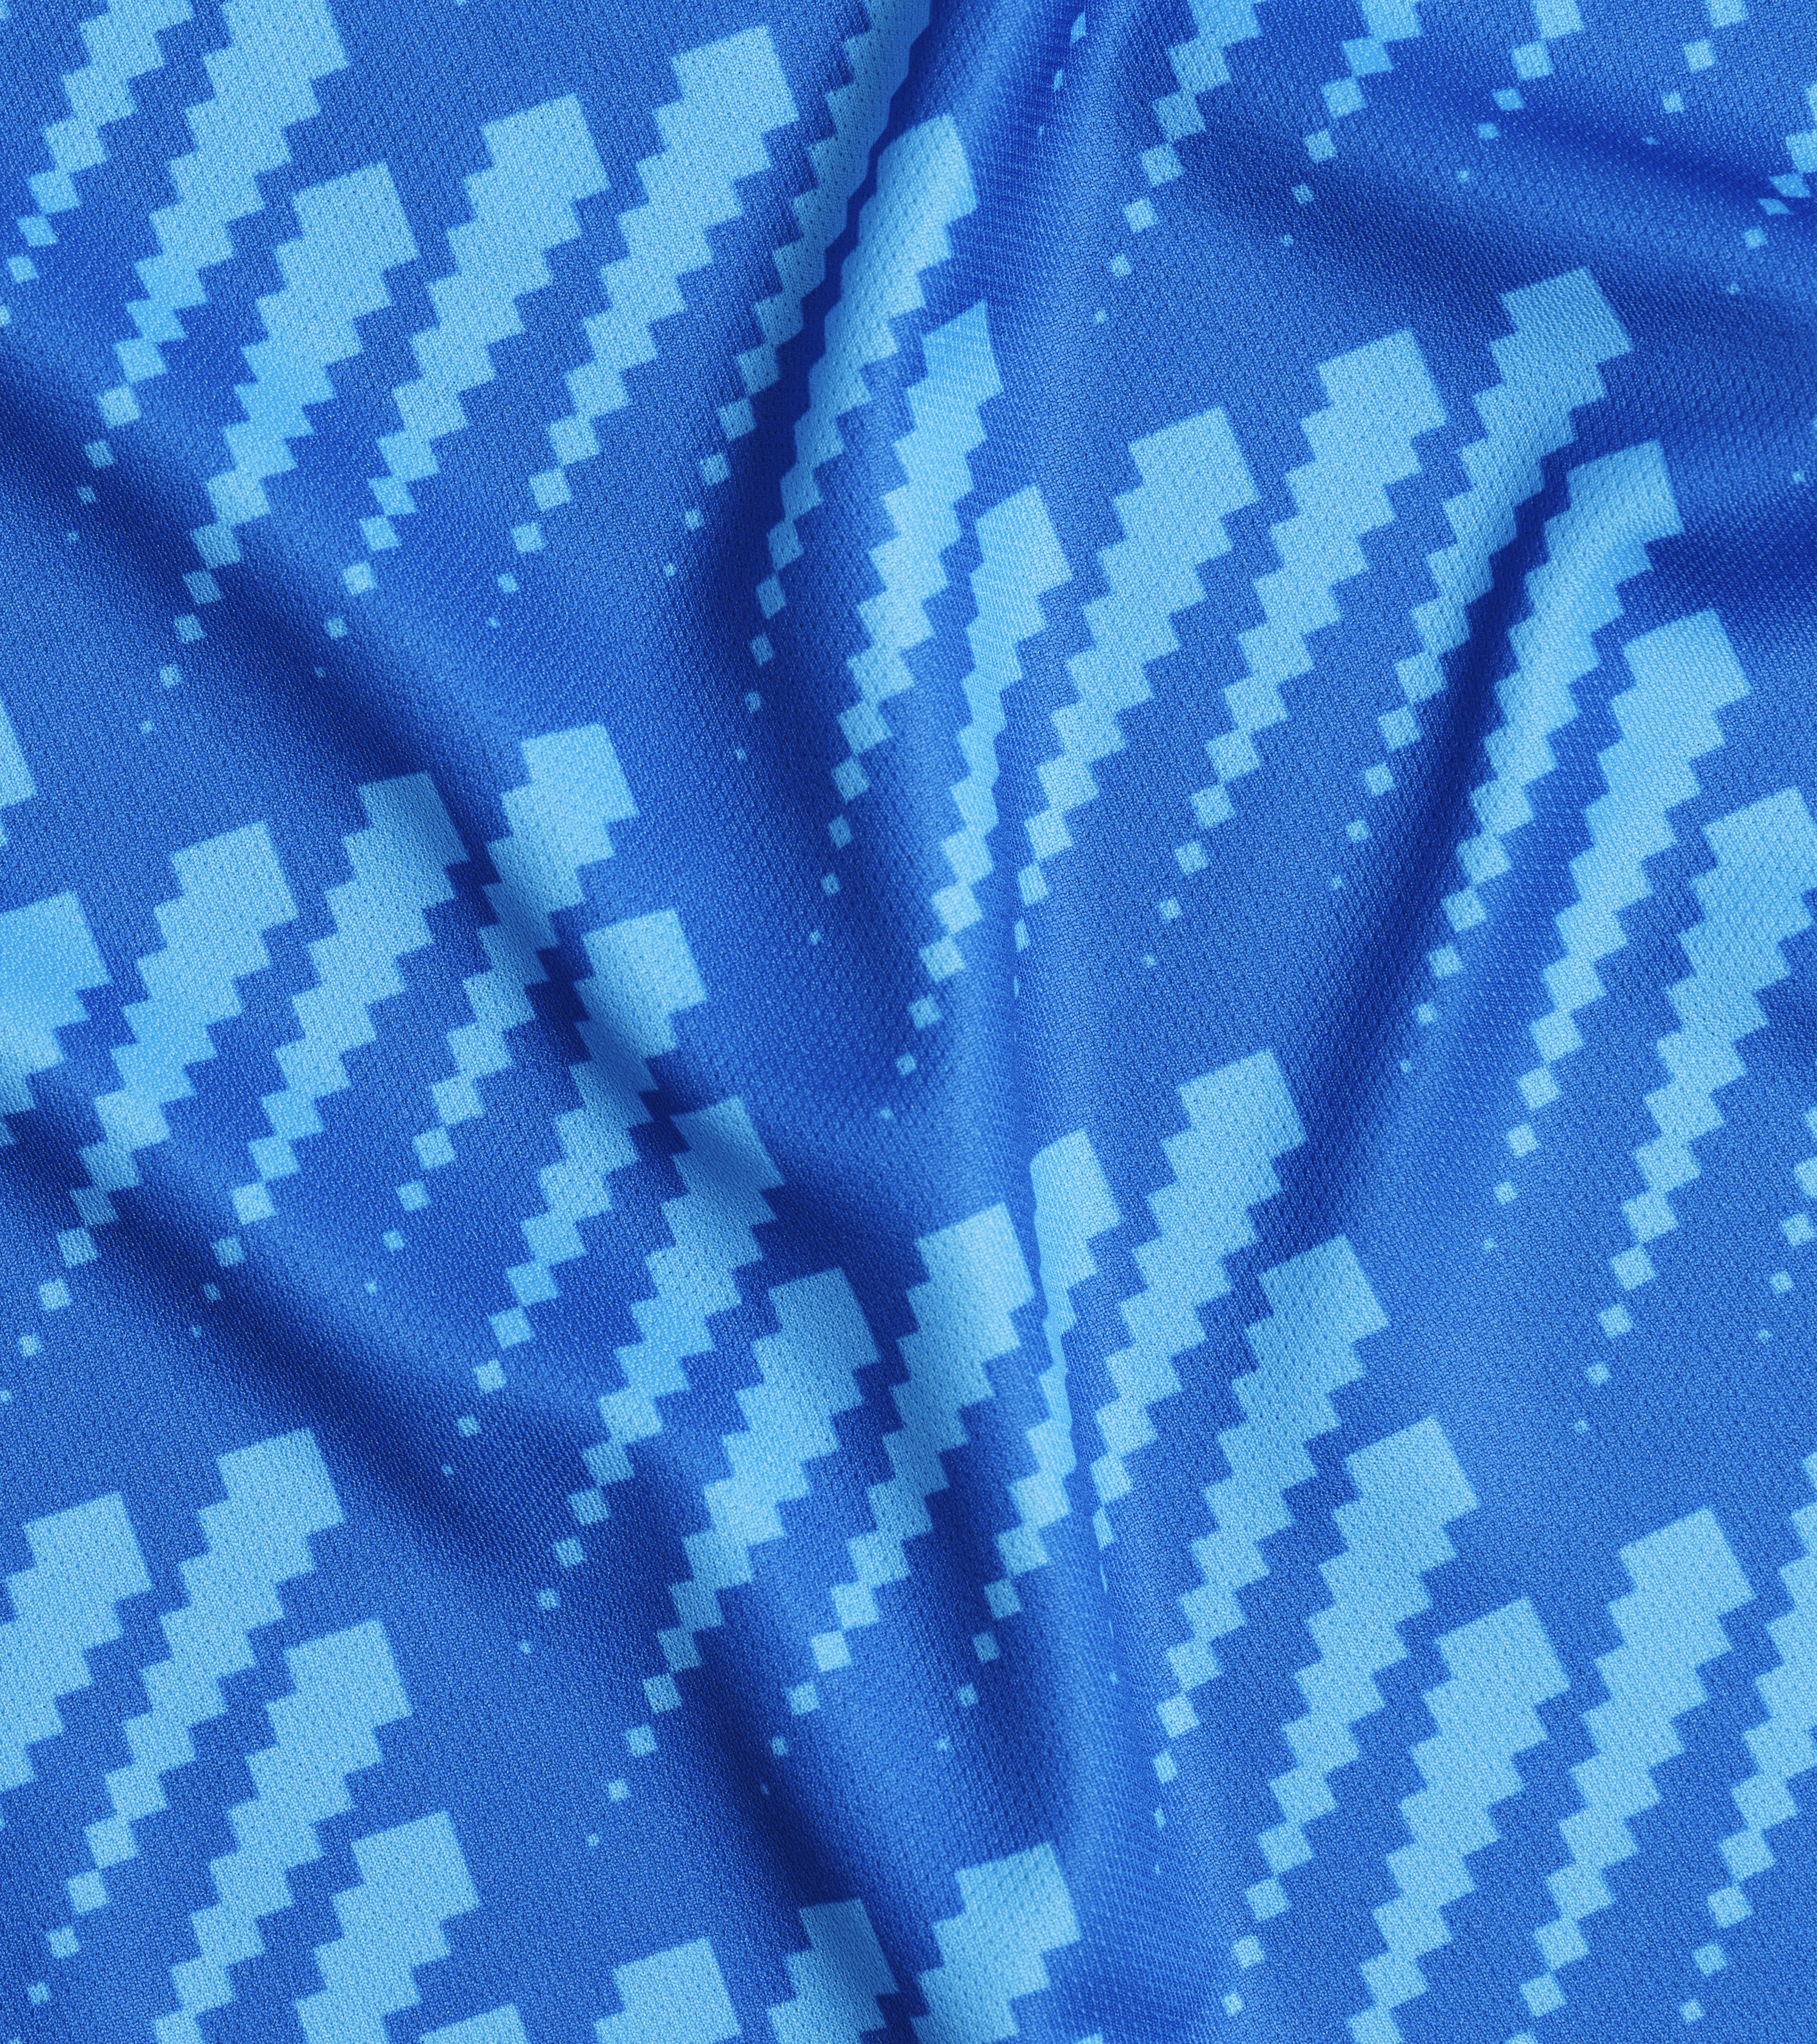 klabu multisport shirt blue fabric close up